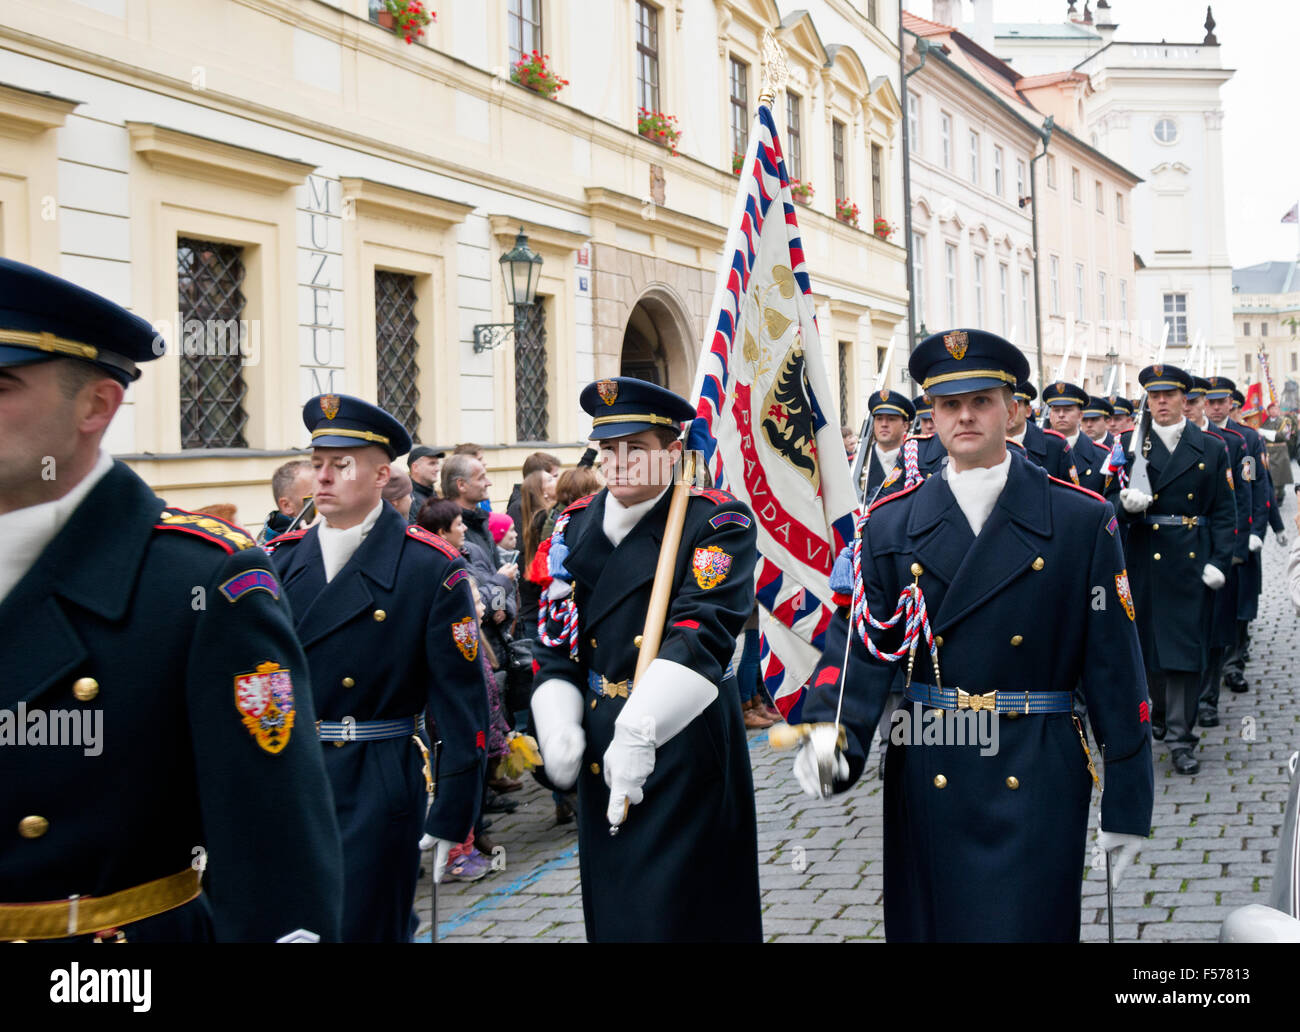 Castle Guard on military oath, Prague Castle, Czech Republic, October 28th, 2015 Credit:  Vaclav Mach/Alamy Live News Stock Photo